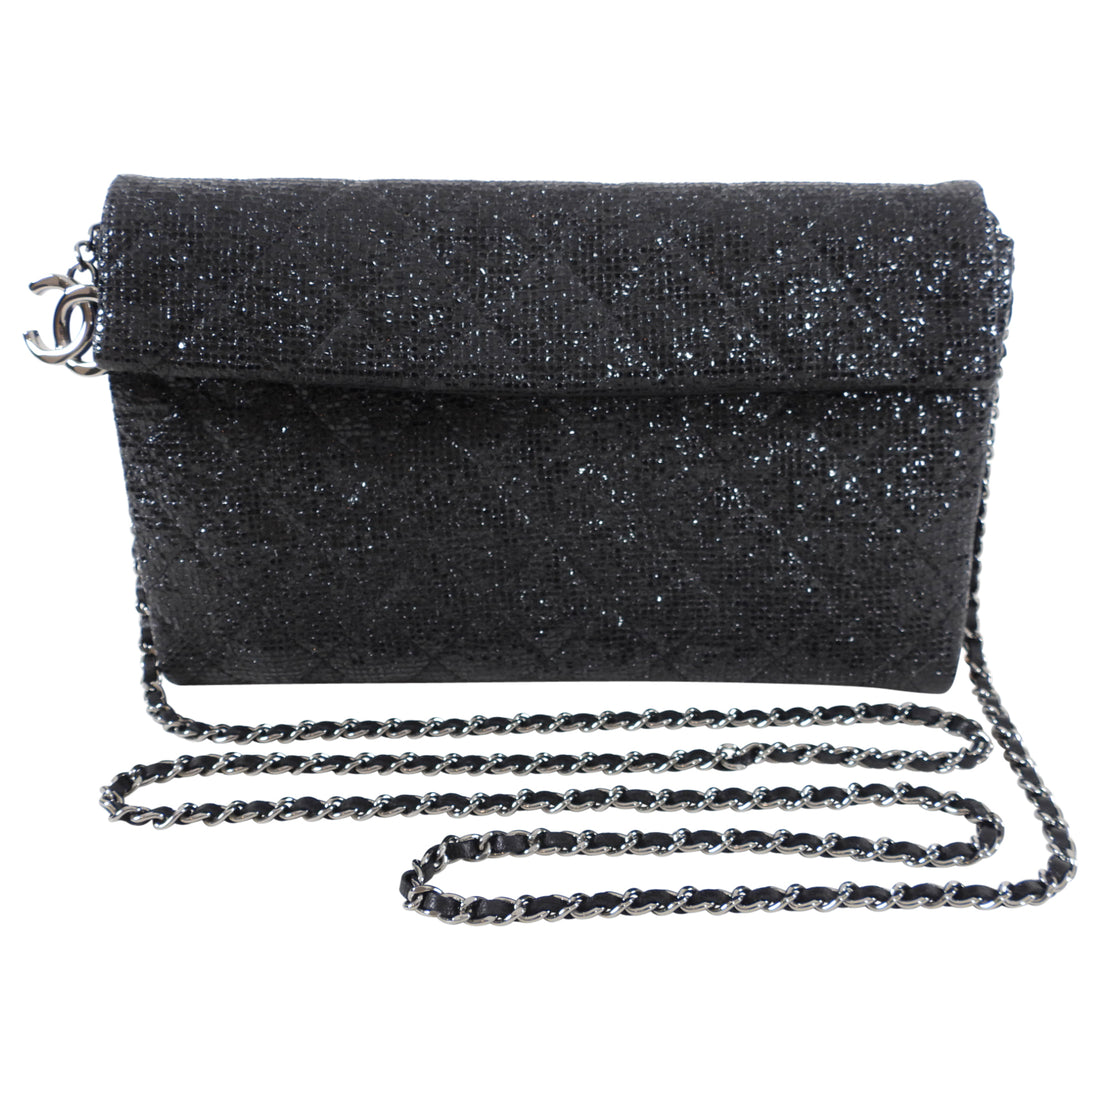 2.55 glitter crossbody bag Chanel Black in Glitter - 28714844